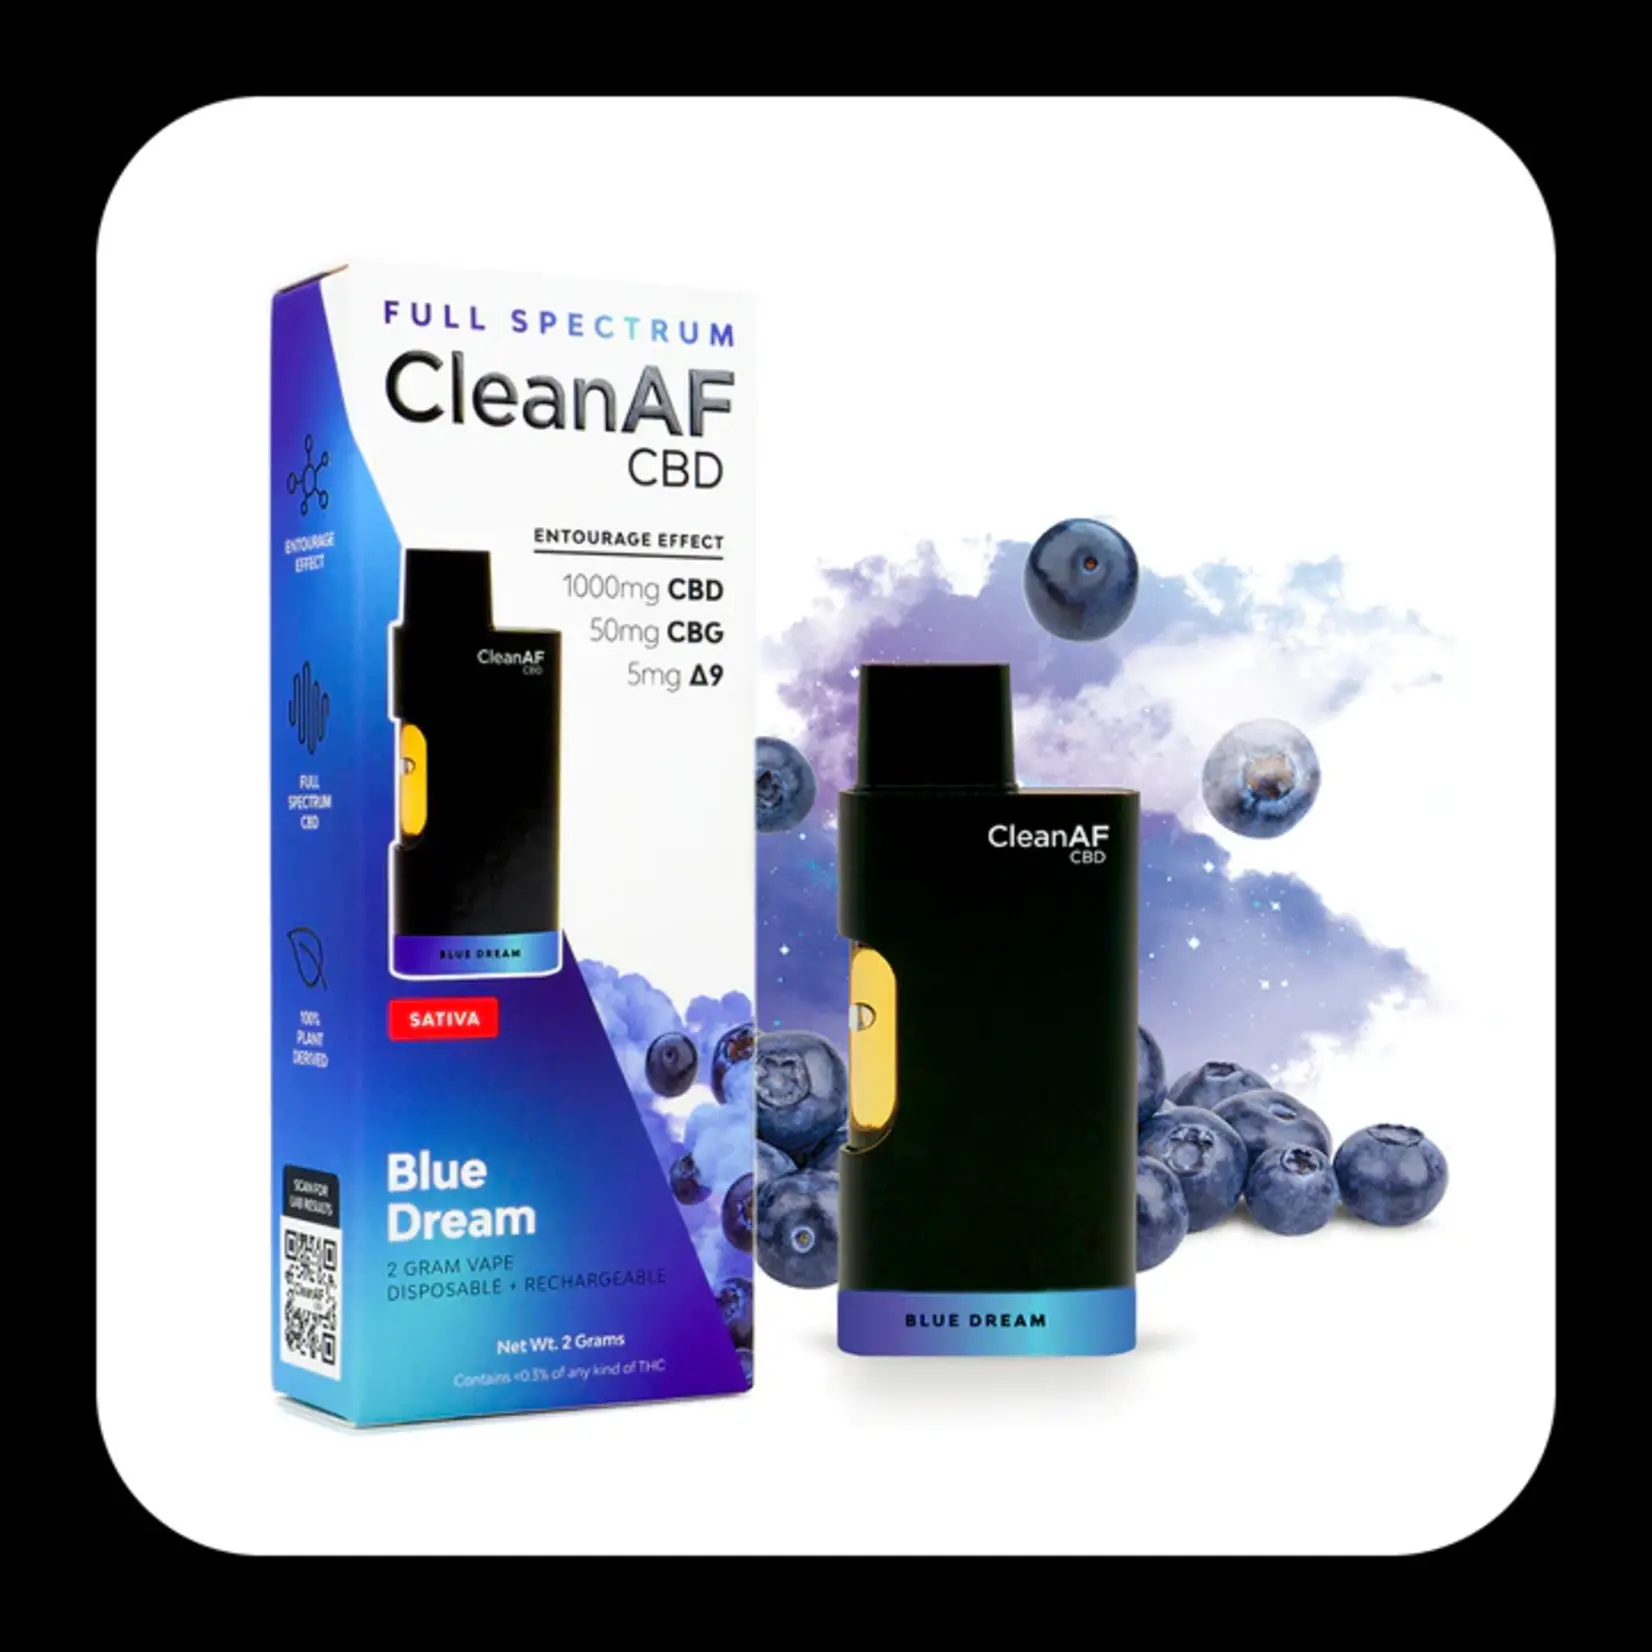 CleanAF Full Spectrum 2g Disposable (1g CBD, 50mg CBG, 50mg CBN, 5mg Delta 9)